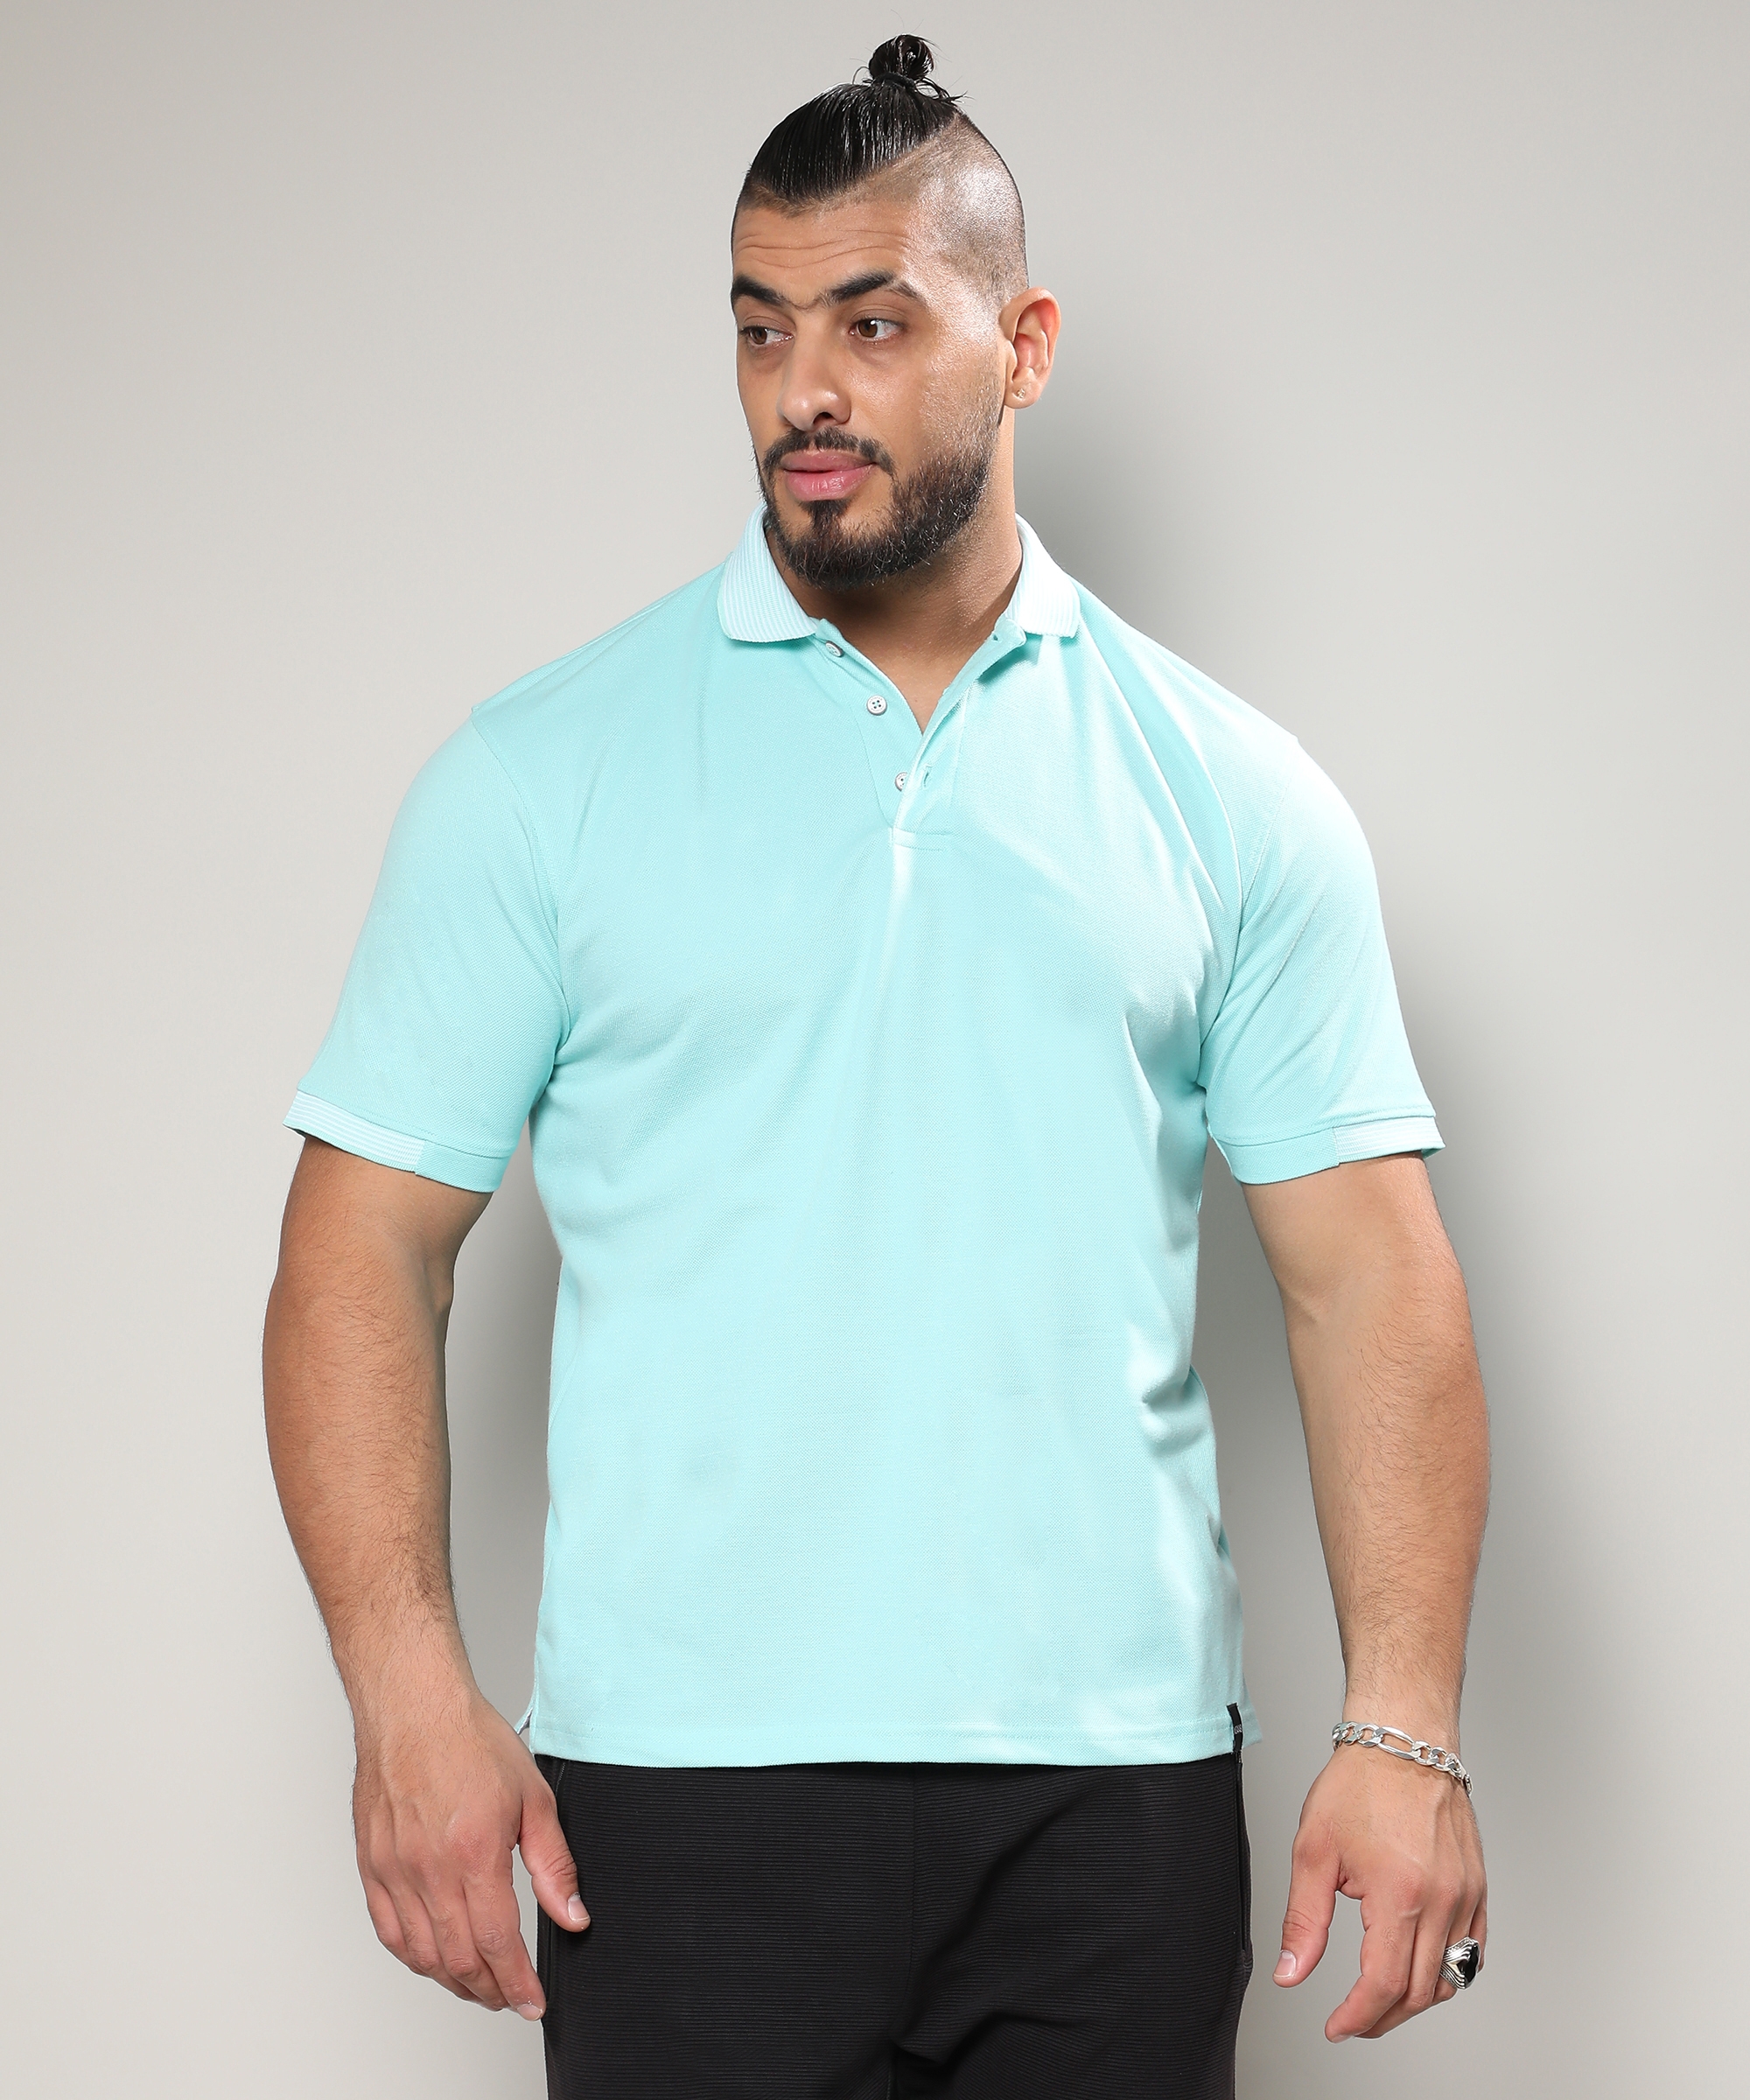 Instafab Plus | Men's Aqua Blue Basic Polo T-Shirt